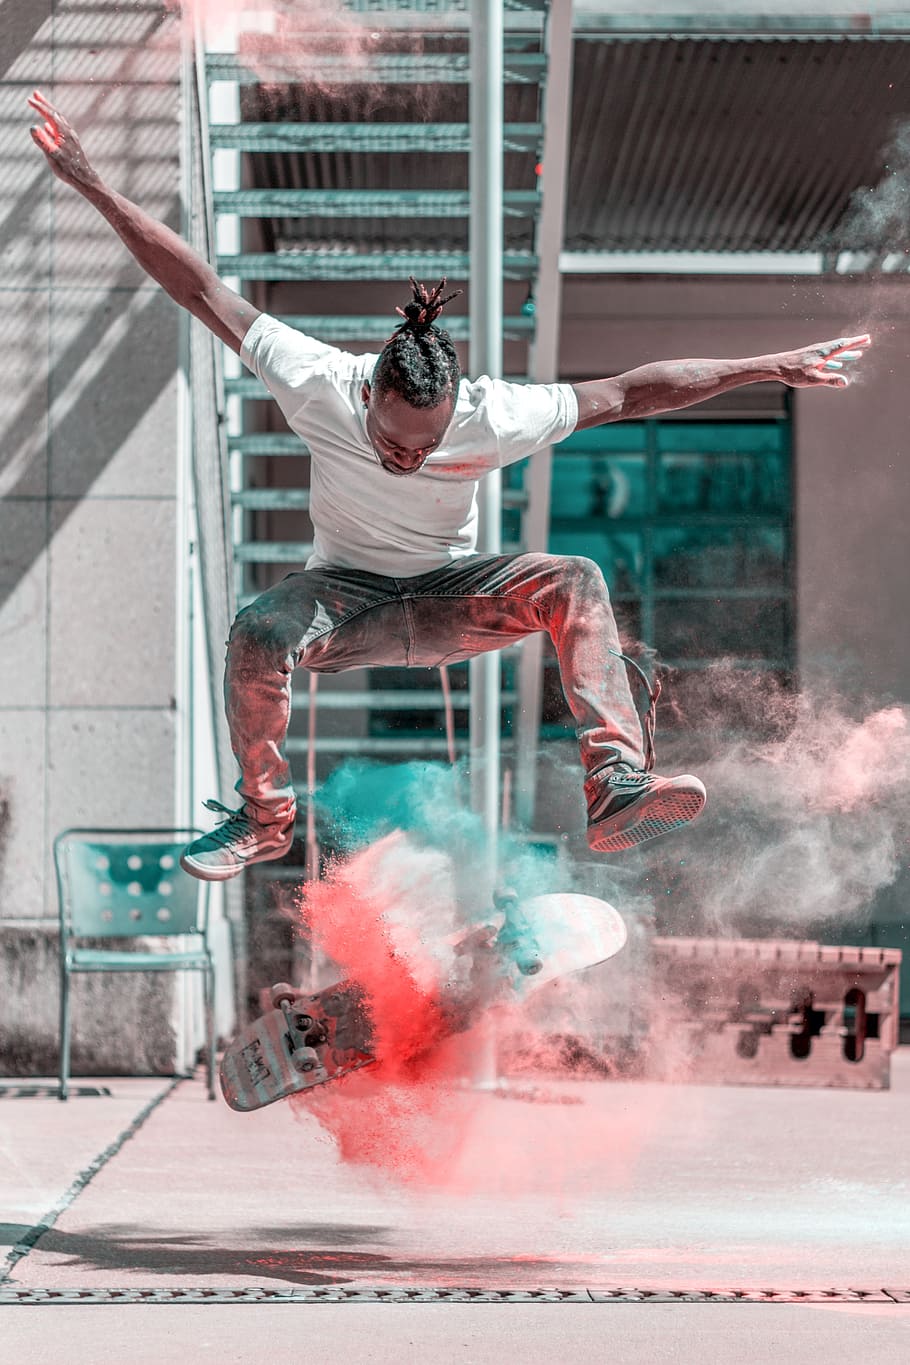 man doing flip trick with skateboard and smoke, skateboarder